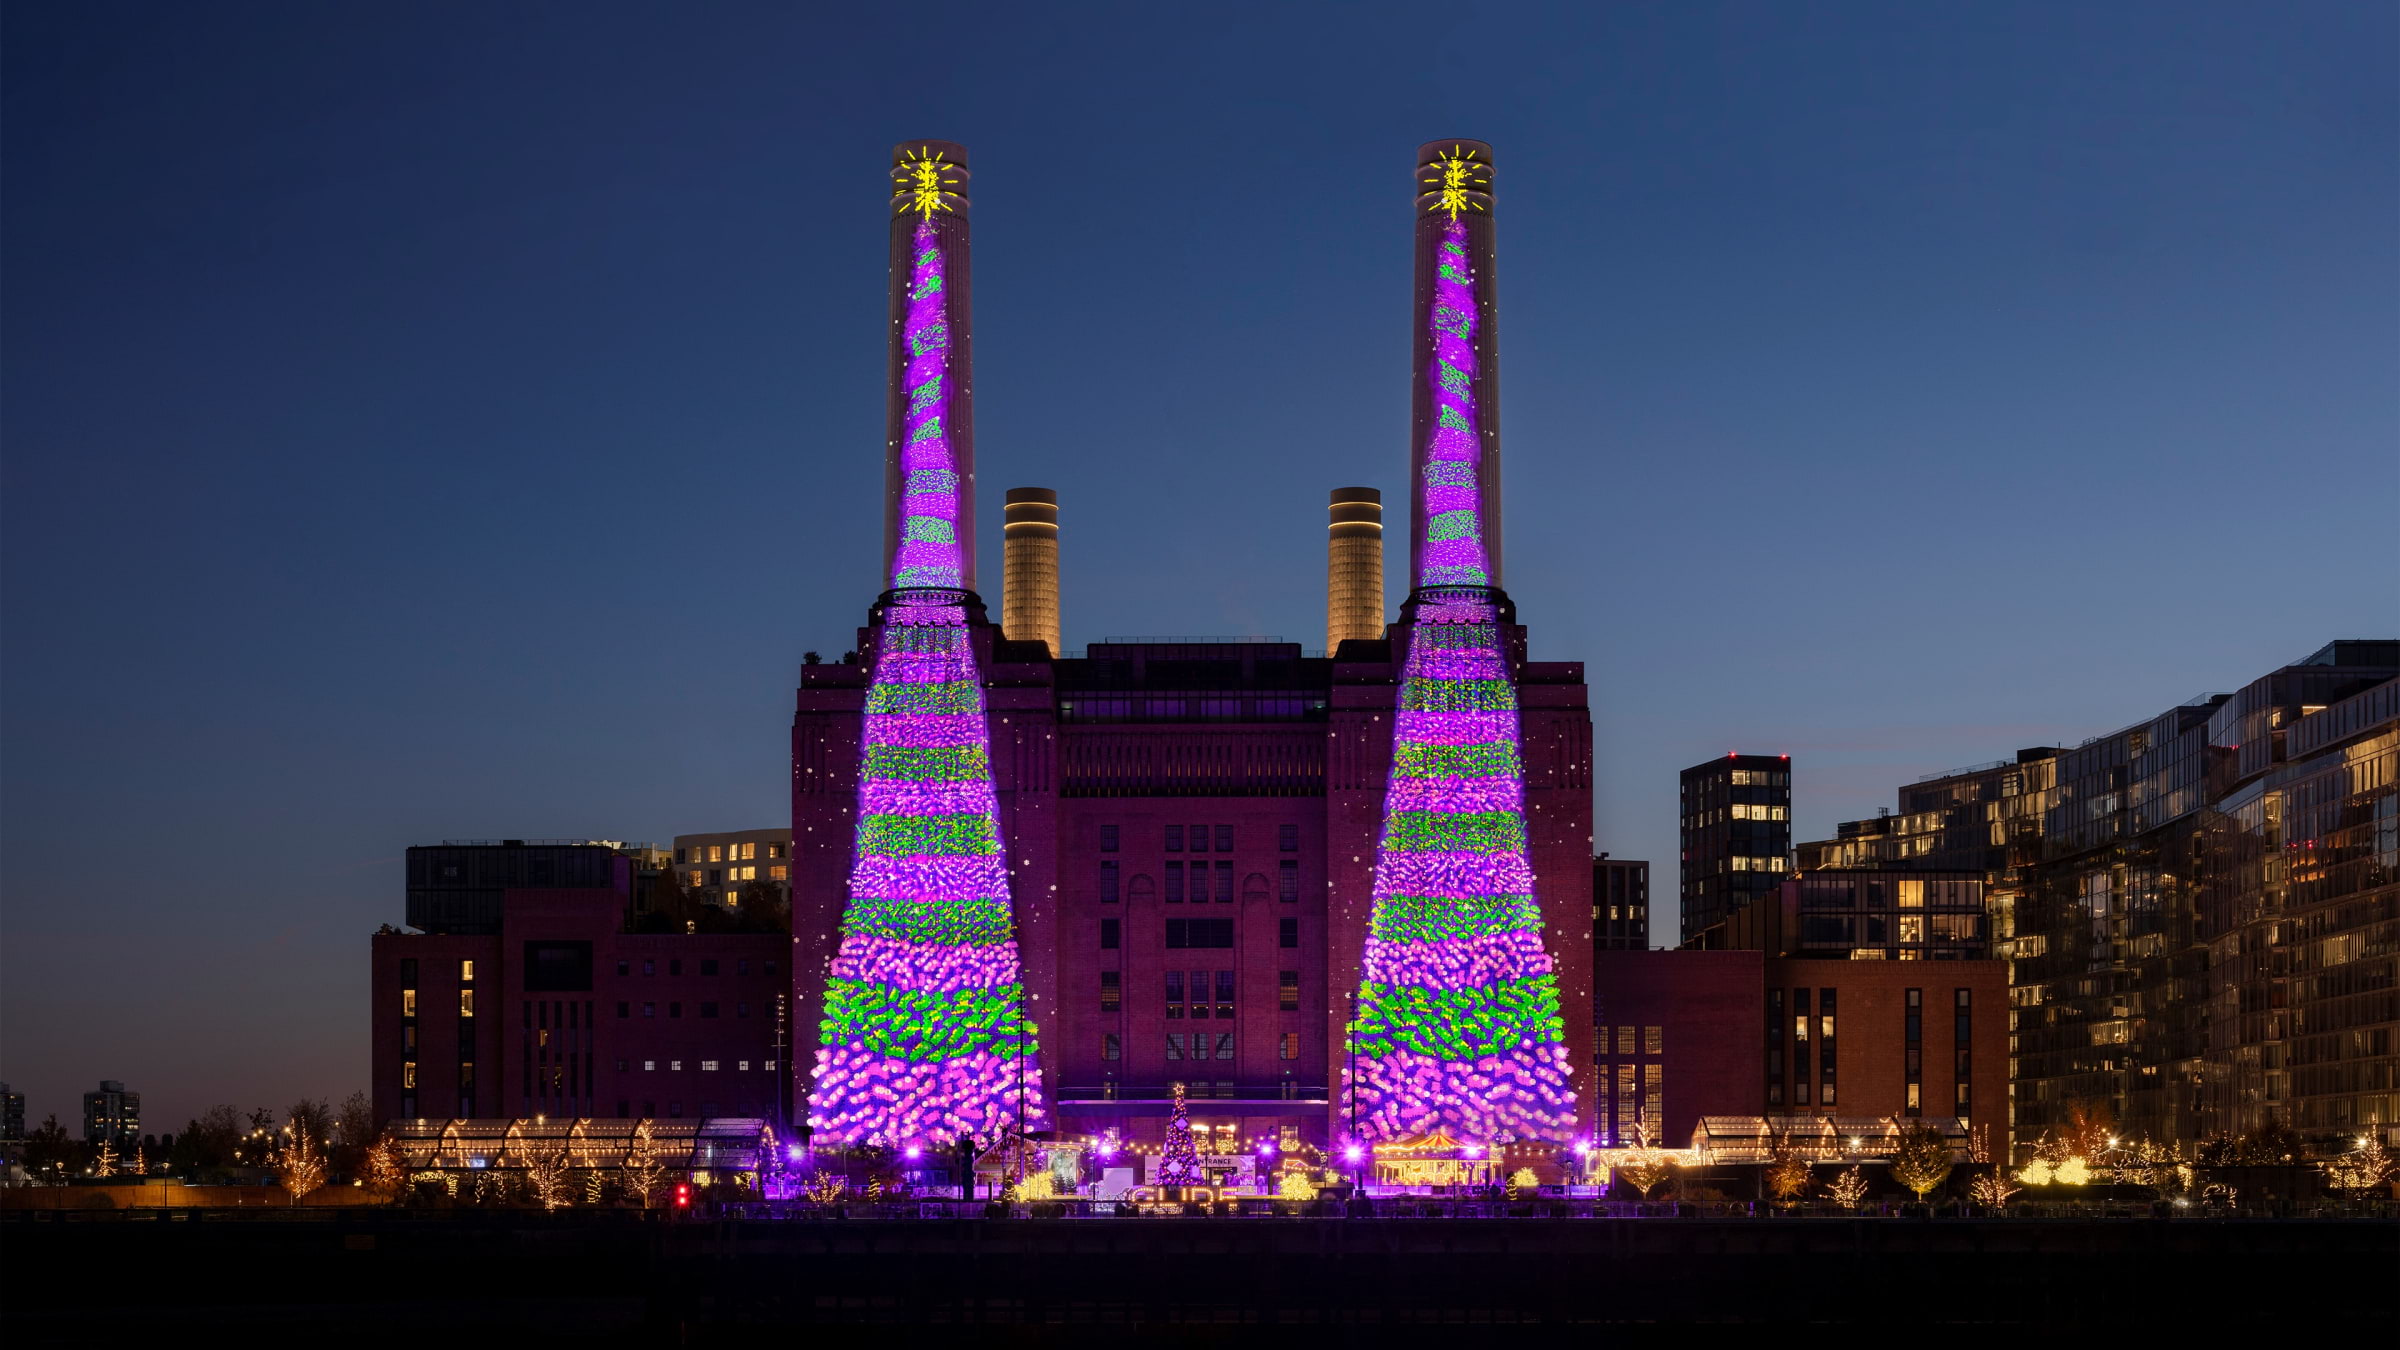 See David Hockney's Bigger Christmas Trees Artwork at Battersea Power Station